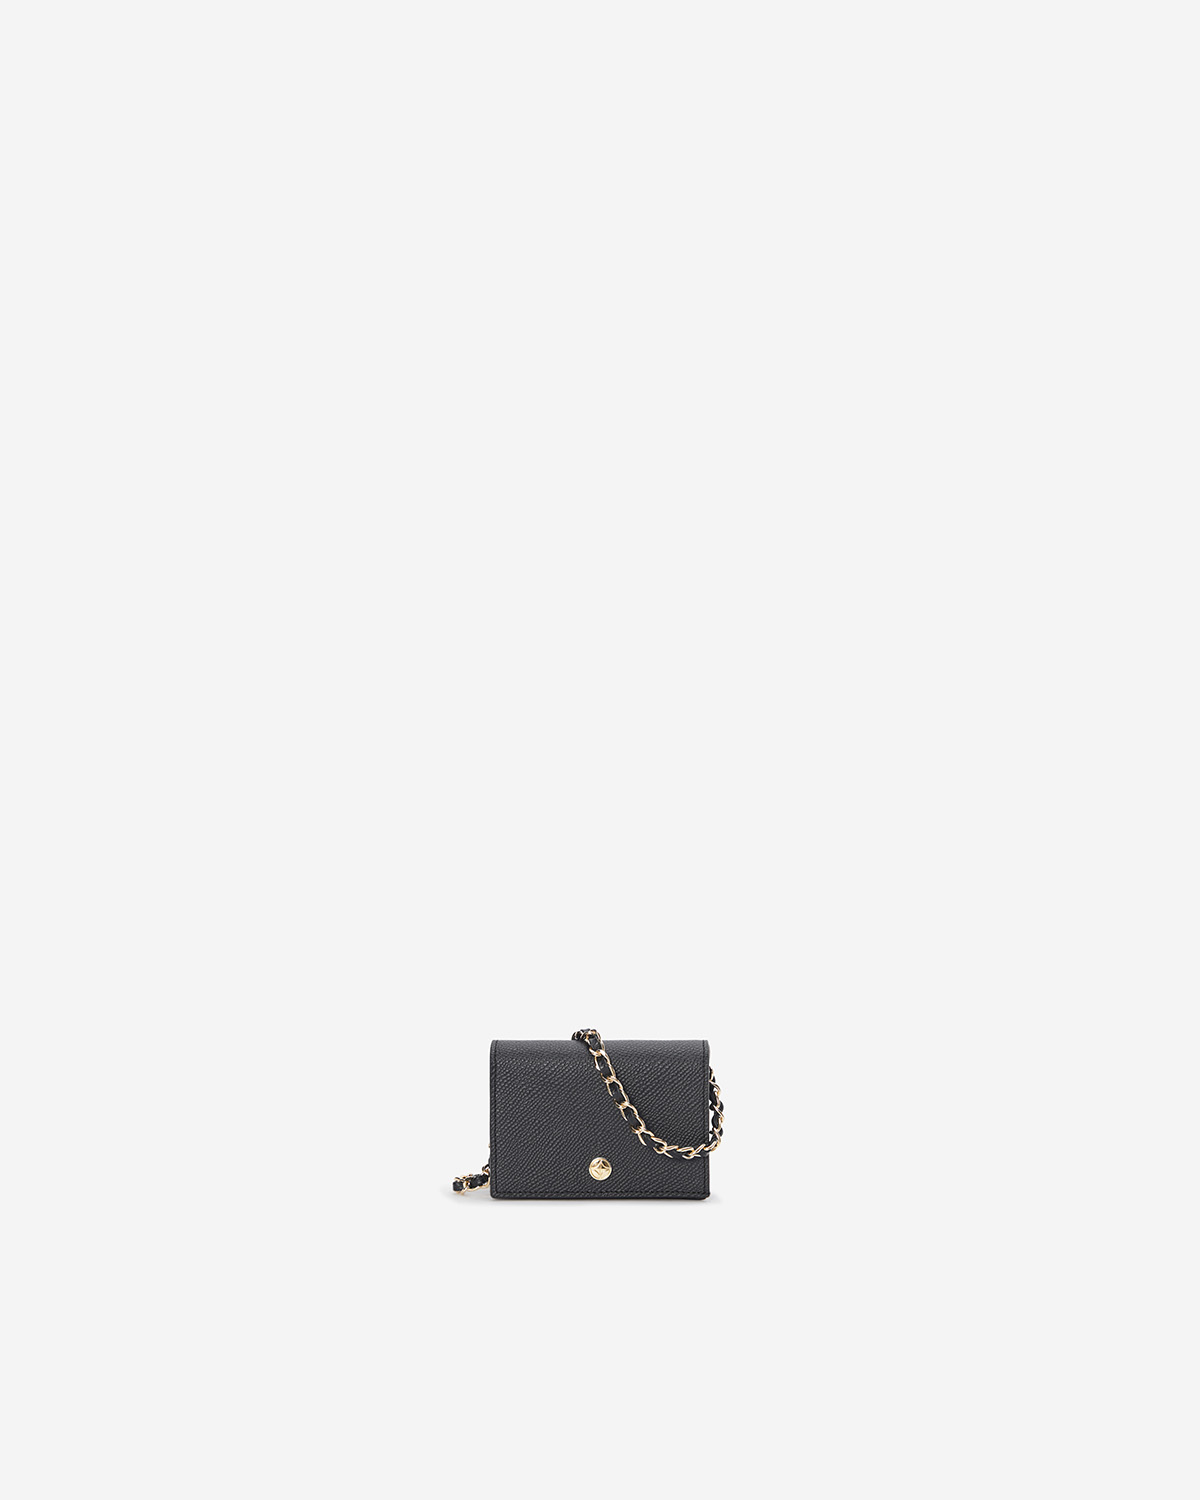 VERA Emily Flap Wallet with Leather Braided Gold Chain in Powerful Black กระเป๋าสตางค์หนังแท้ แบบเปิดฝา พร้อมสายโซ่สีทองร้อยหนัง สีดำ